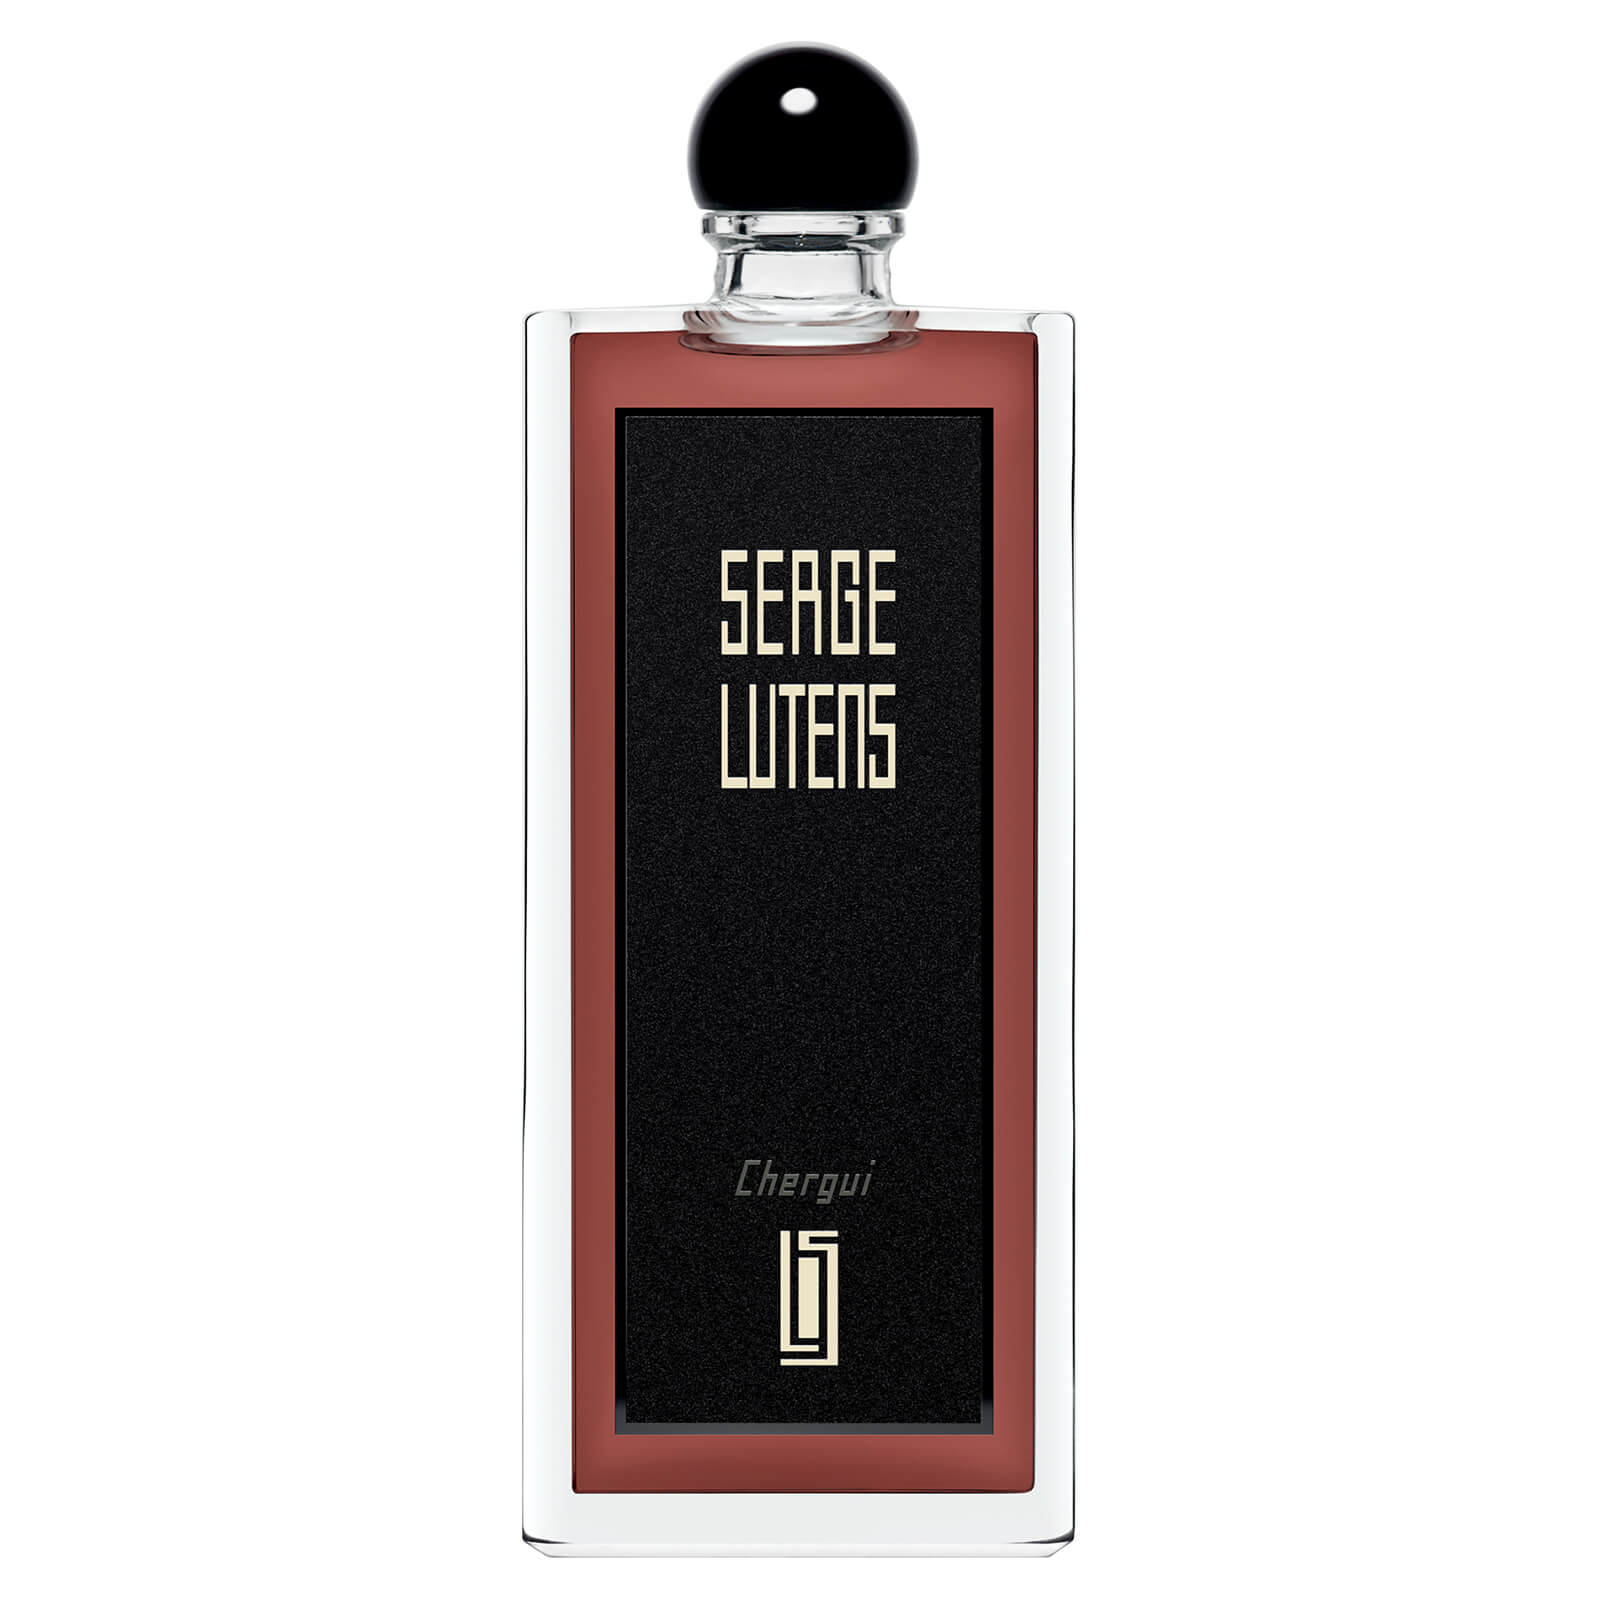 Photos - Women's Fragrance Serge Lutens Chergui Eau de Parfum - 50ml 36112339155 